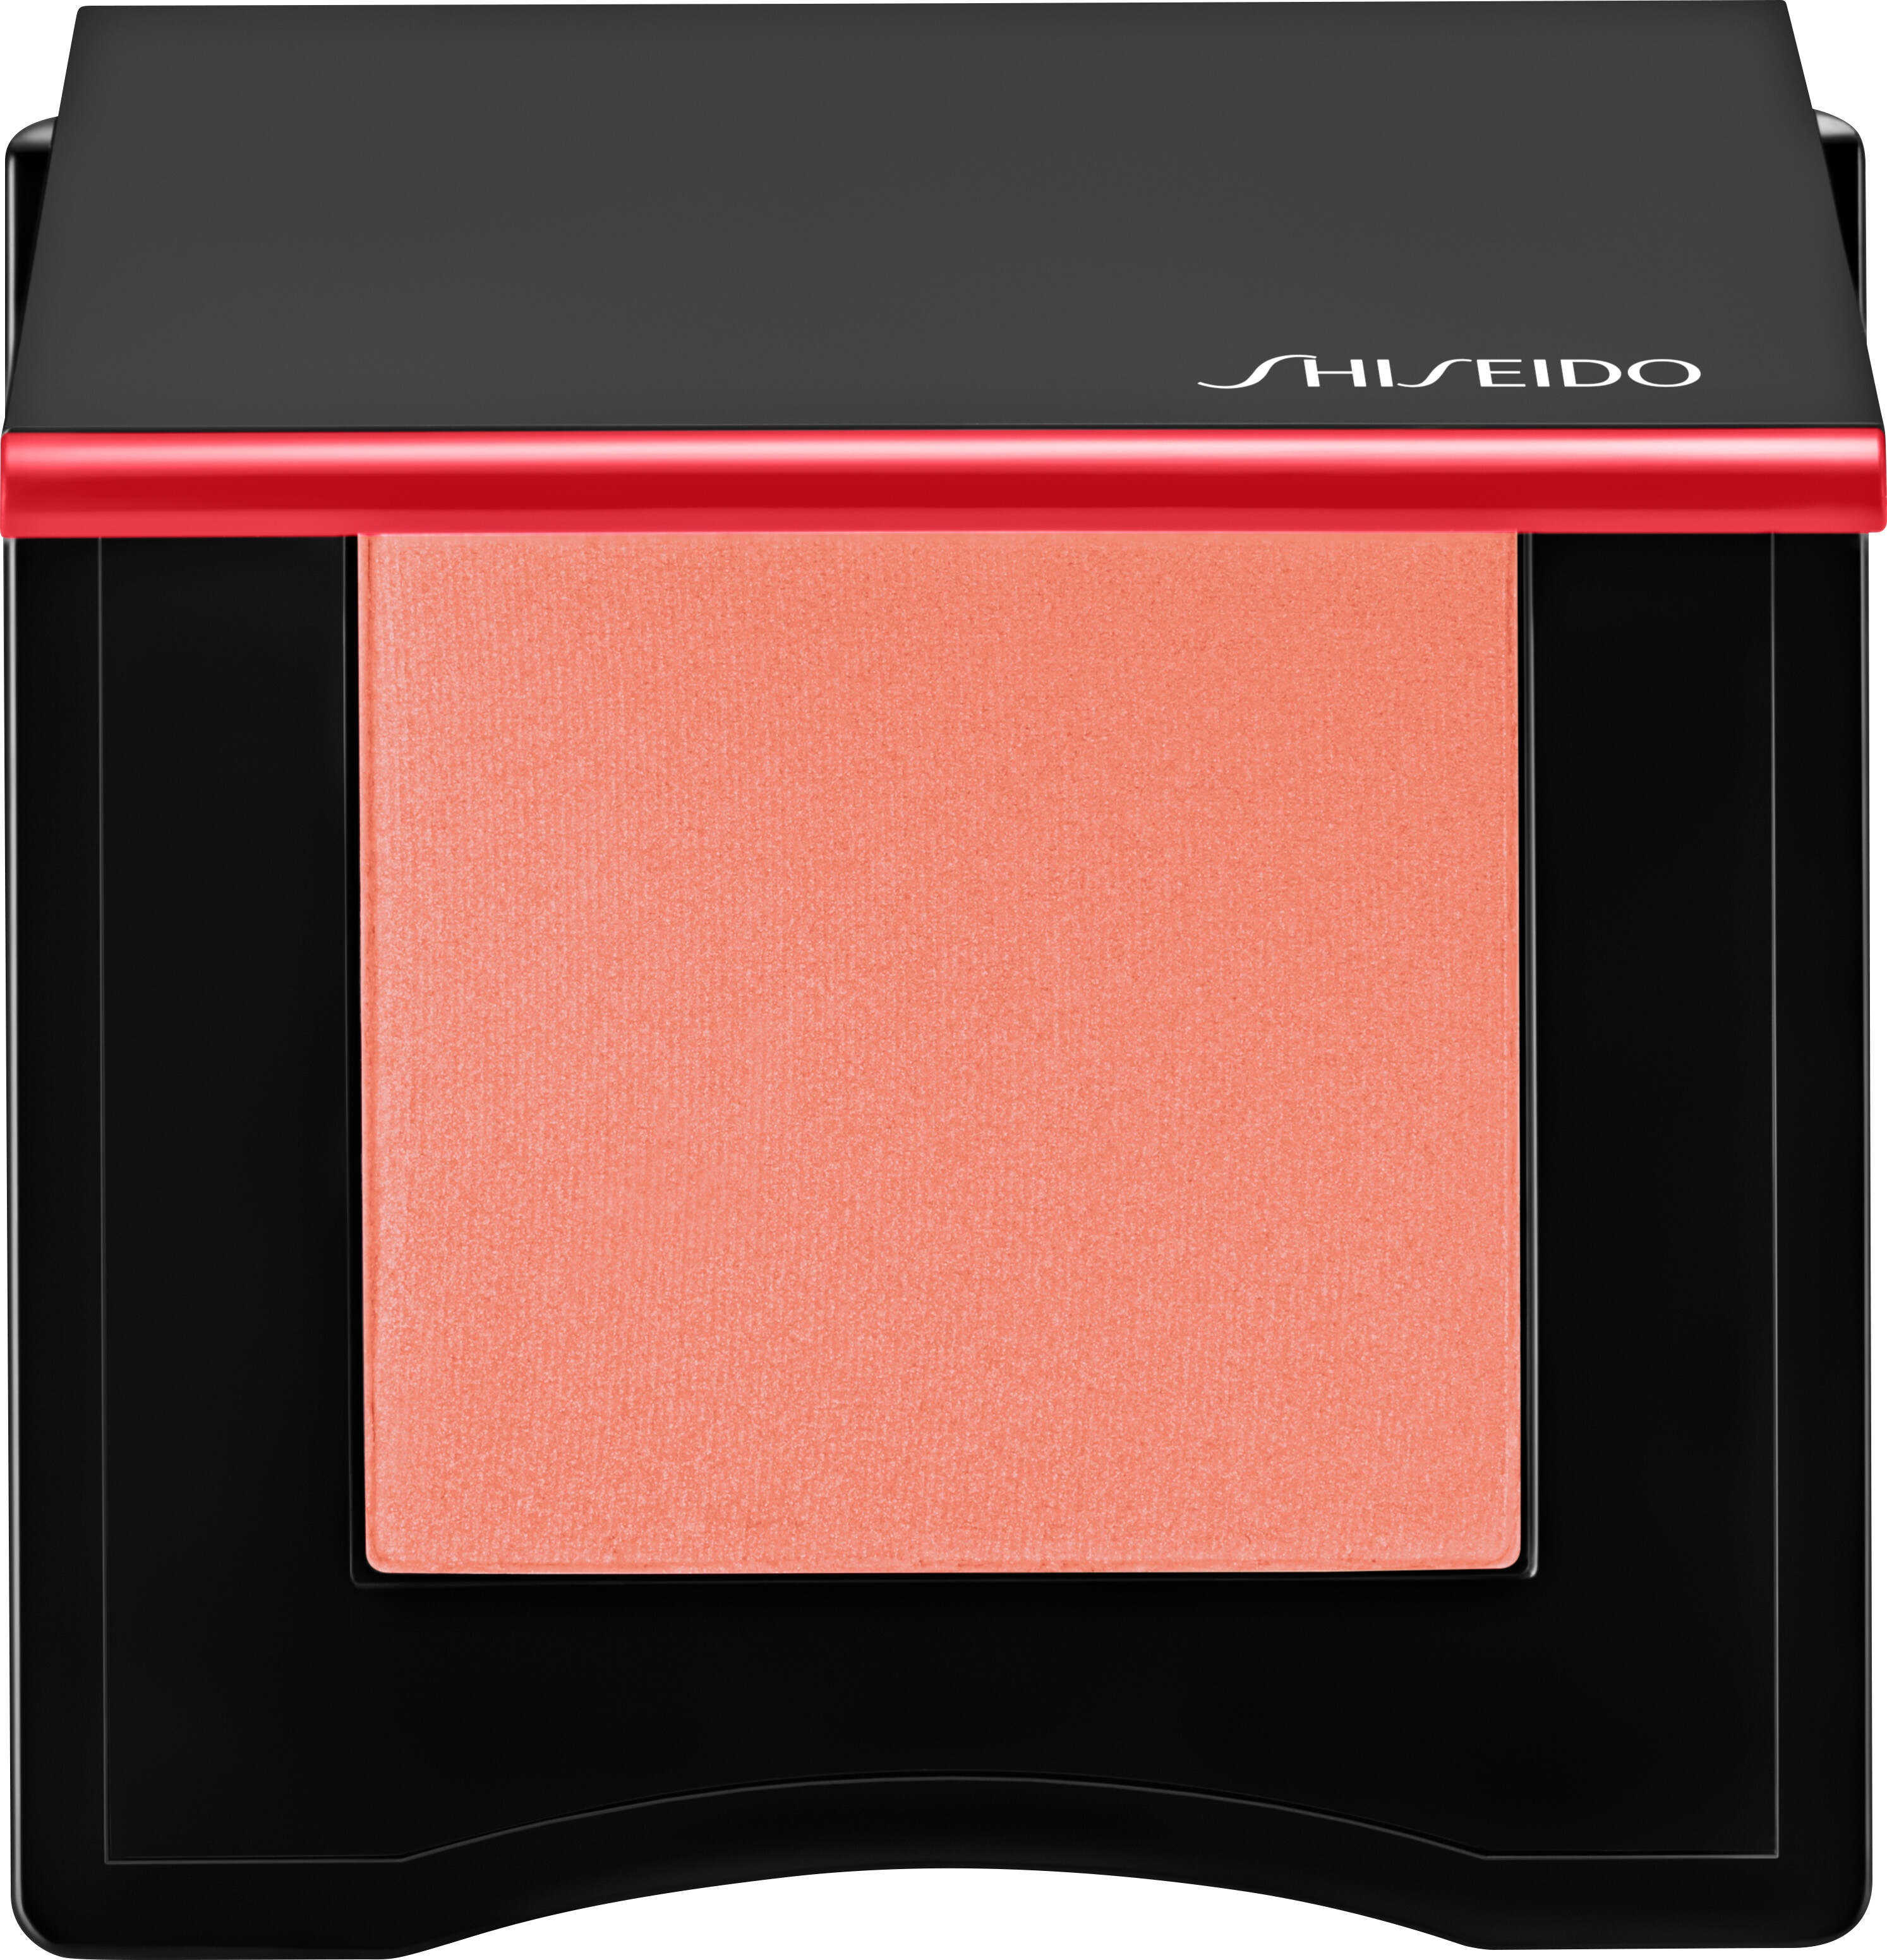 Shiseido InnerGlow CheekPowder 4g 06 - Alpen Glow